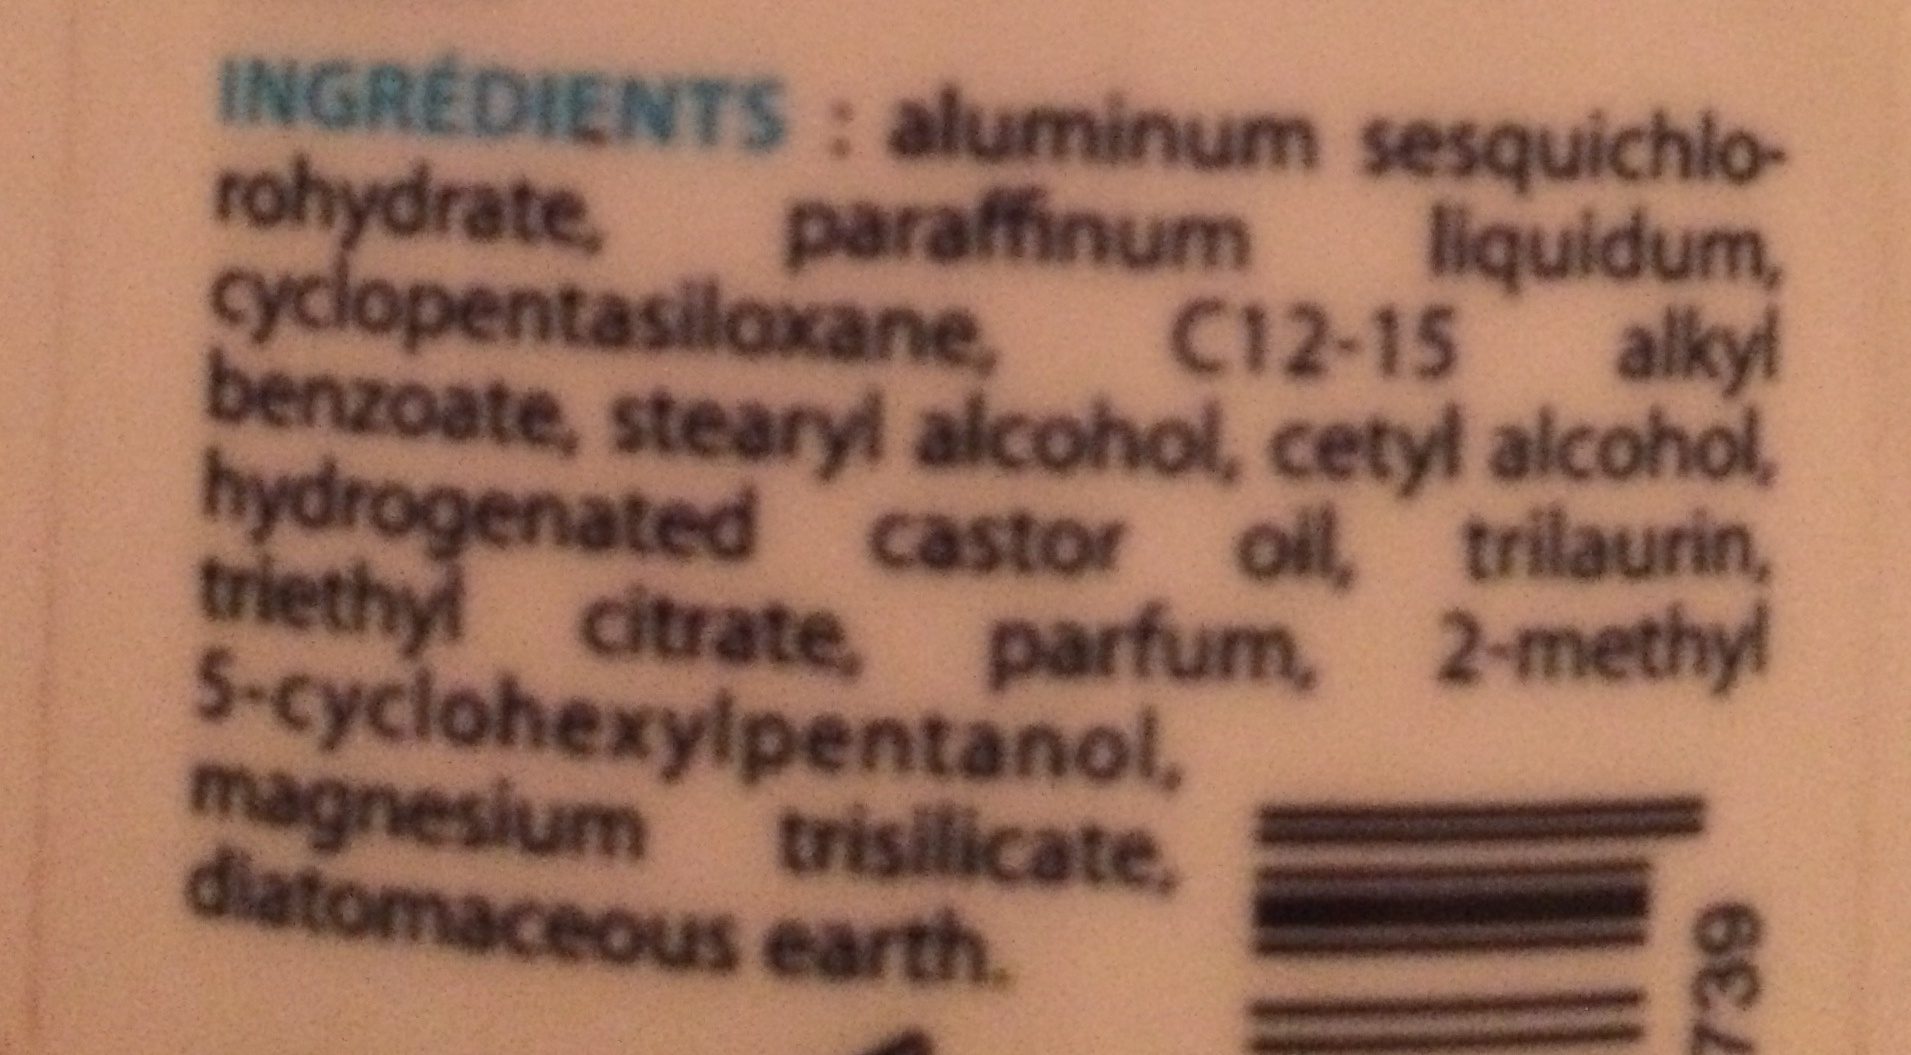 Etiaxil DeStick Anti transpirant 48H - Ingredients - fr